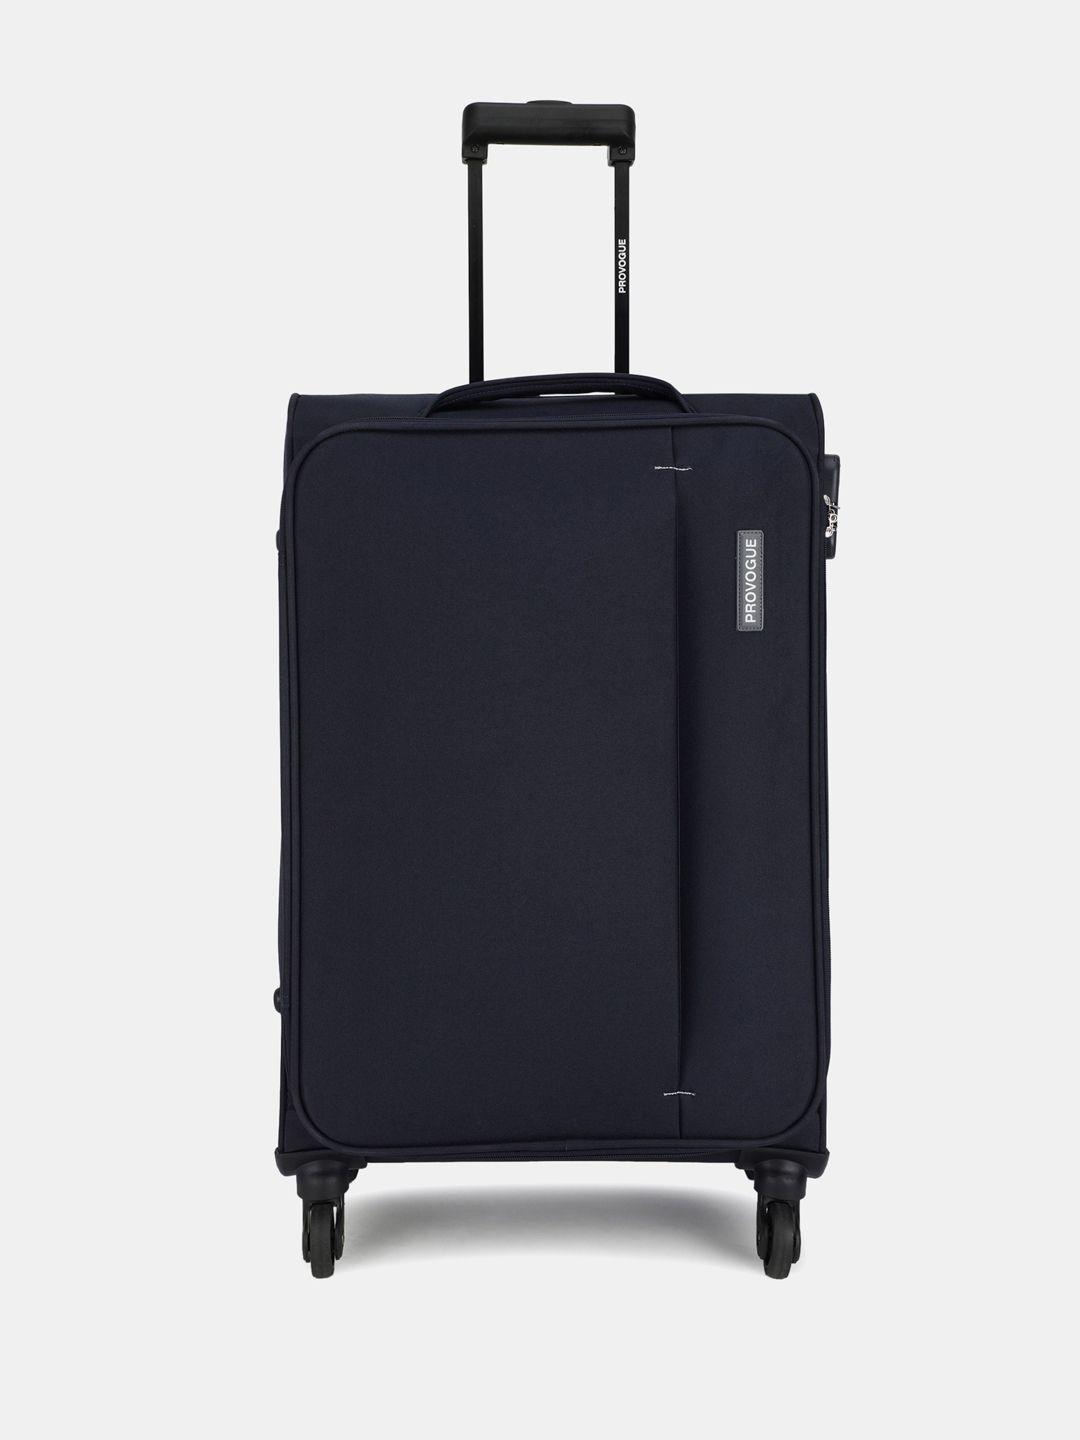 provogue edge cabin trolley suitcase - 55 cm